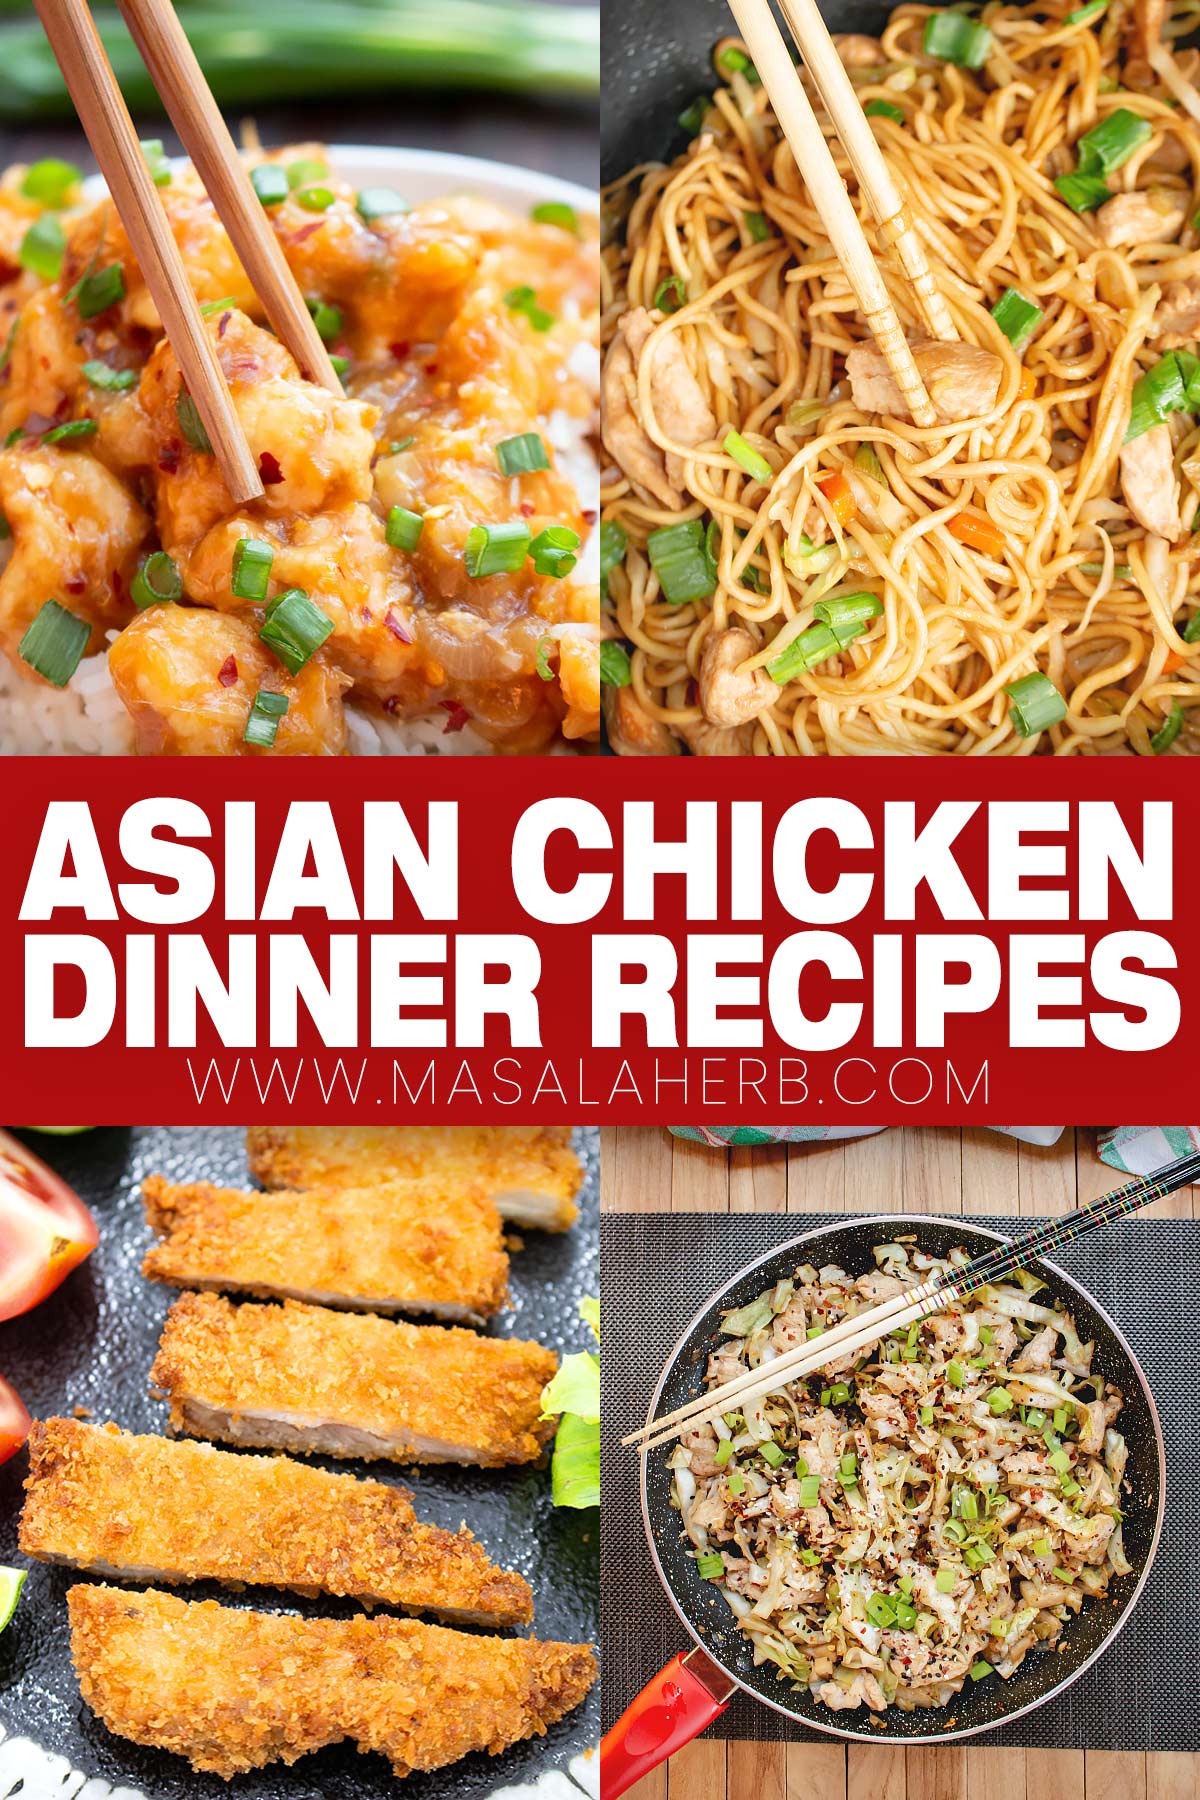 Asian Chicken Dinner Recipes pin image